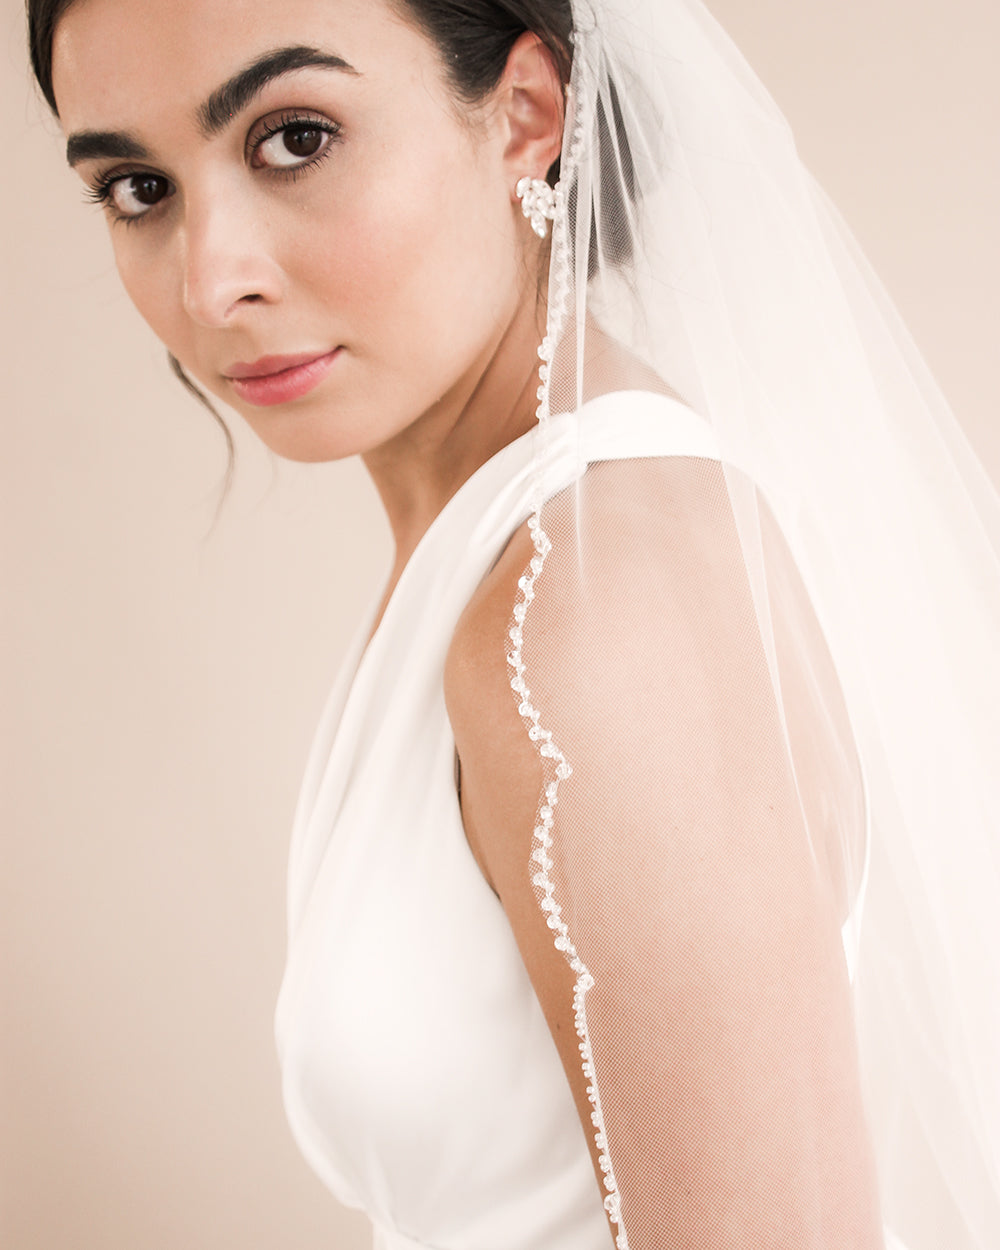 ELAWBTY Womens 1 Tier Fingertip Length Short Crystal Beaded Wedding Bridal Veil with Comb X09